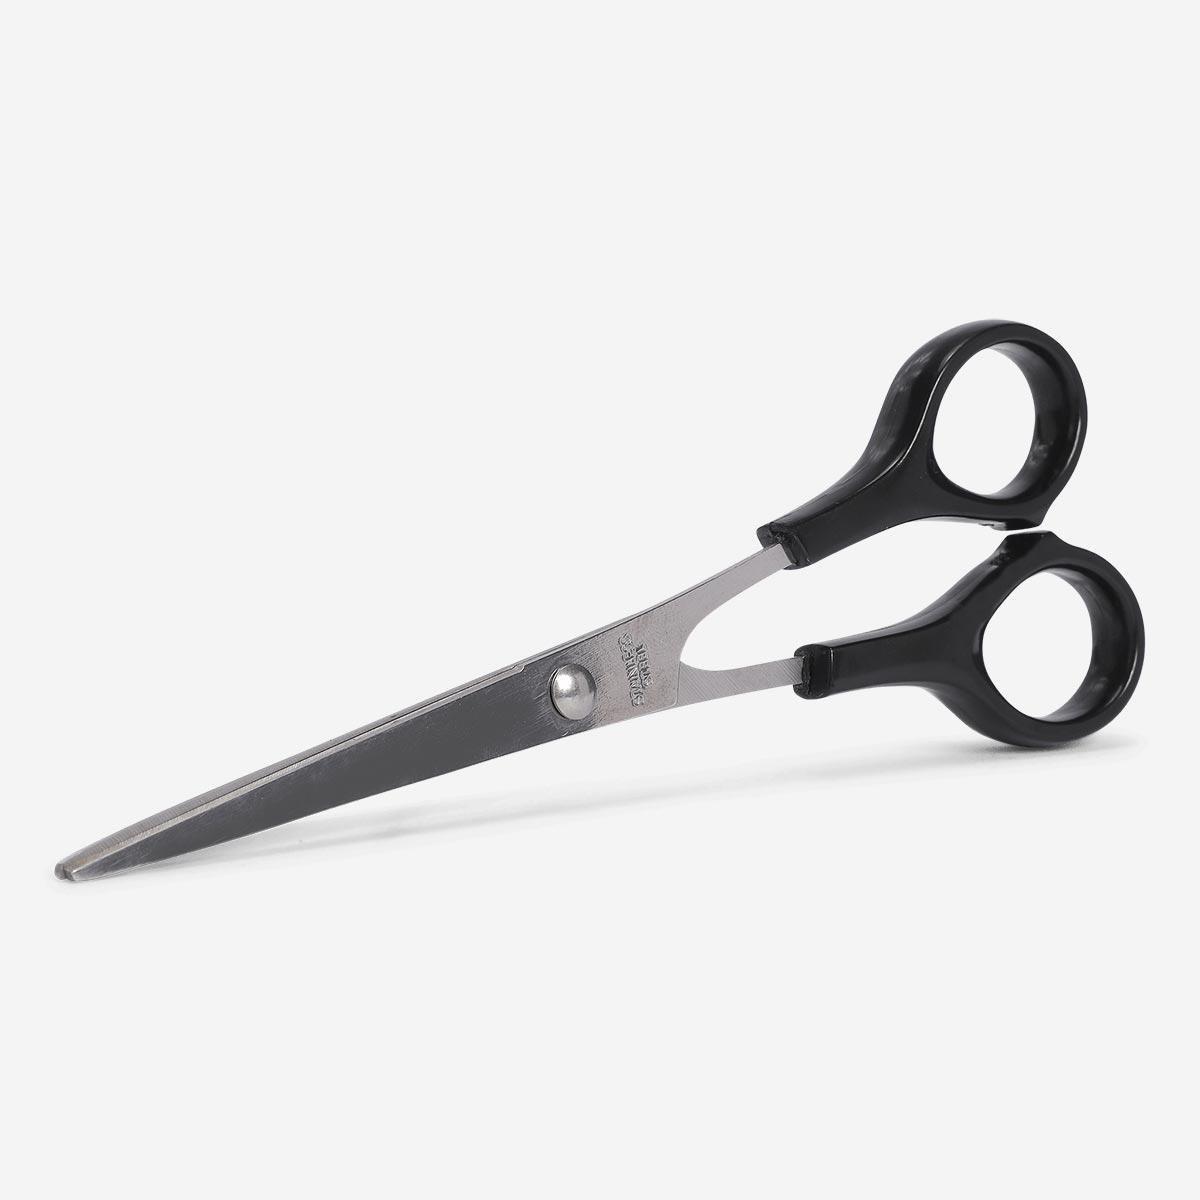 Black steel scissors